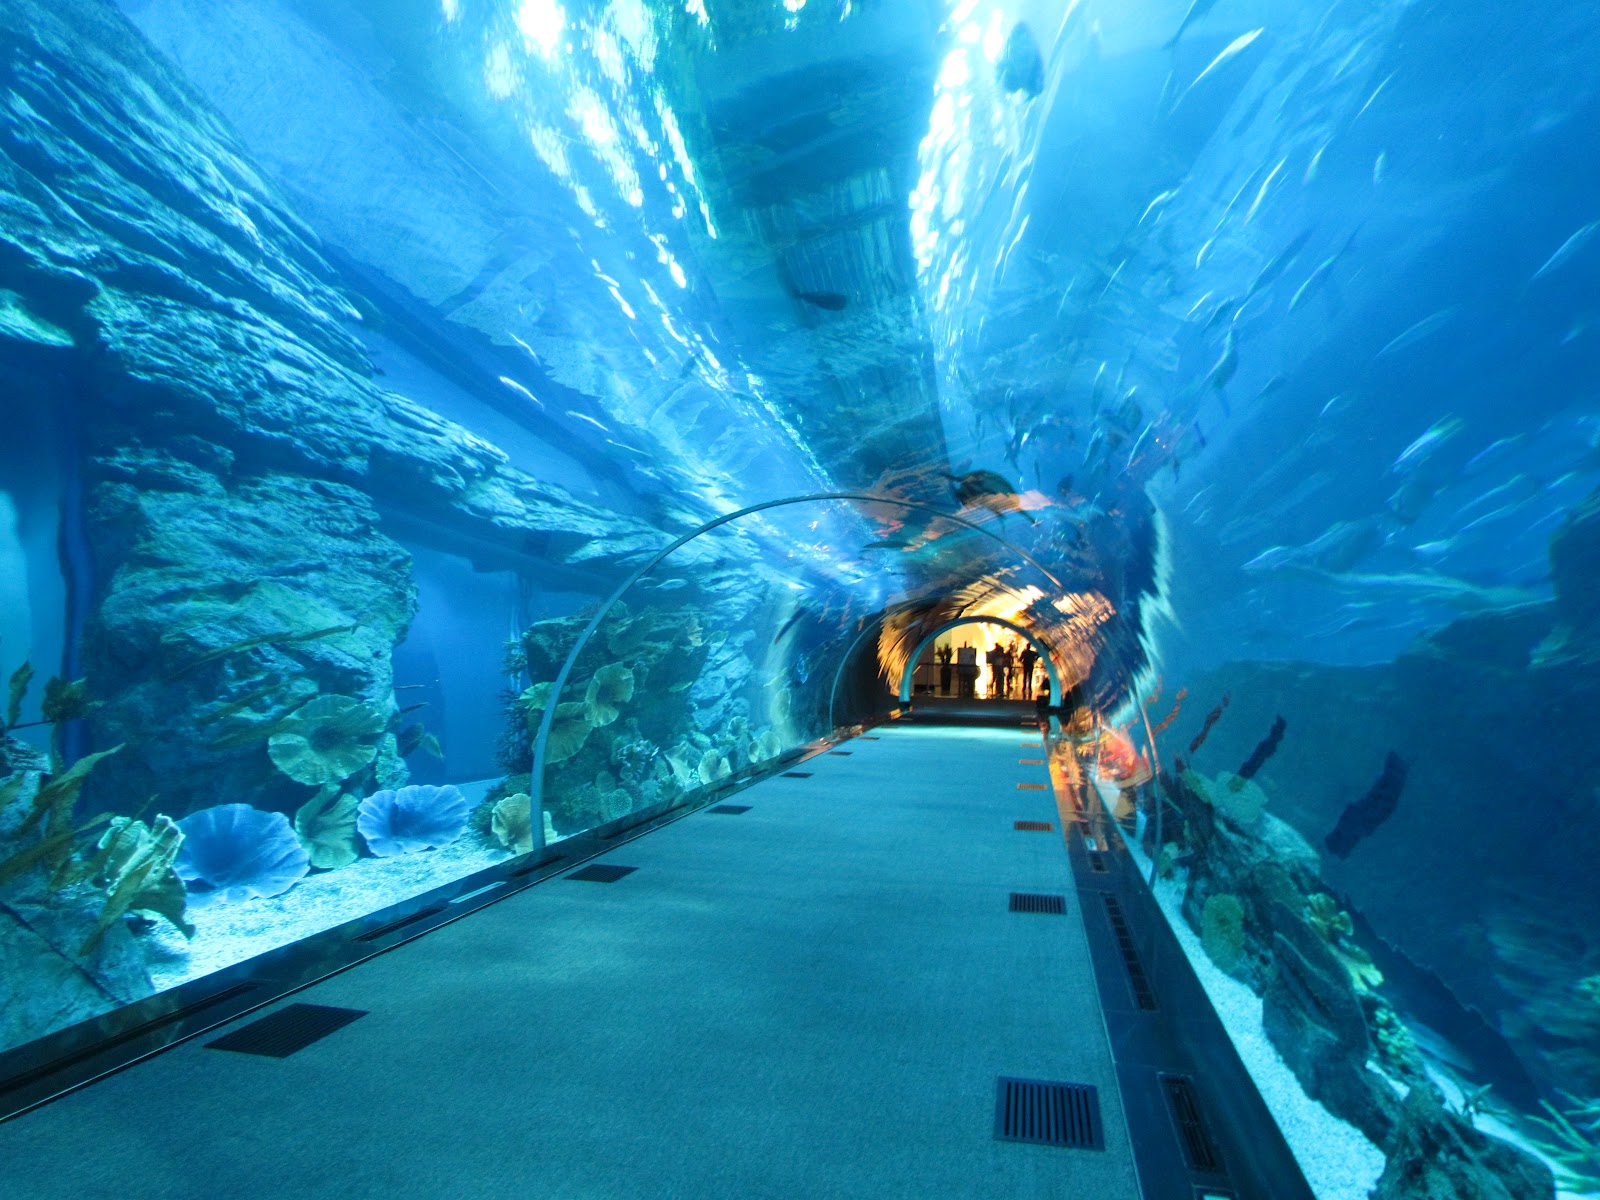 dubai aquarium - إكواريوم دبي (2)